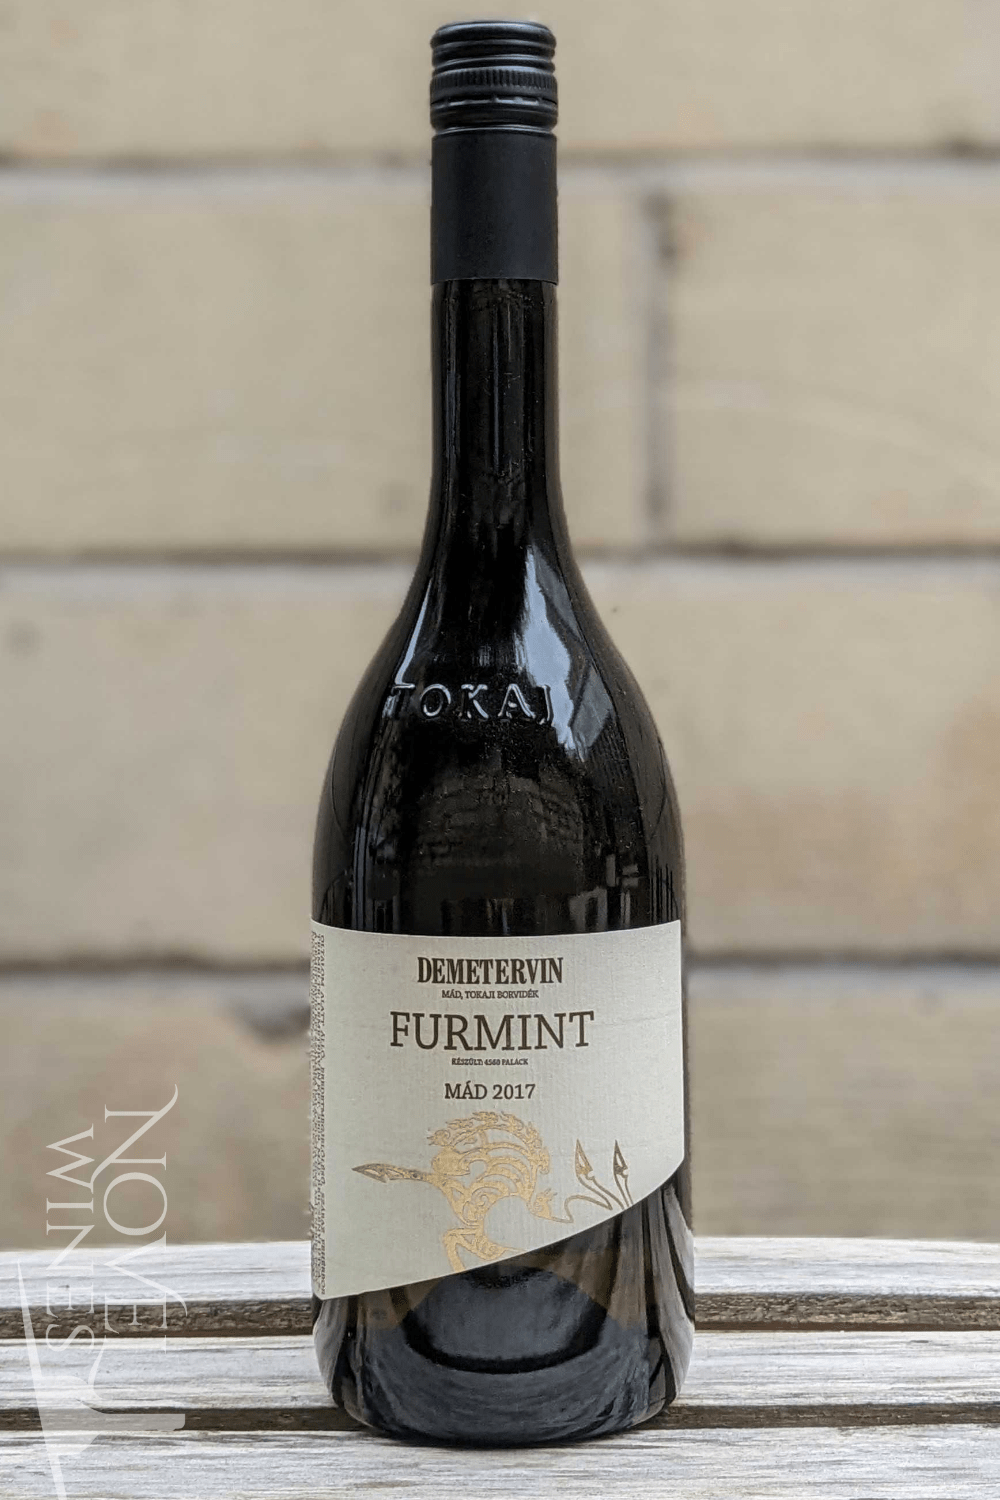 Demeter White Wine Demetervin Furmint 2017, Mad, Tokaj